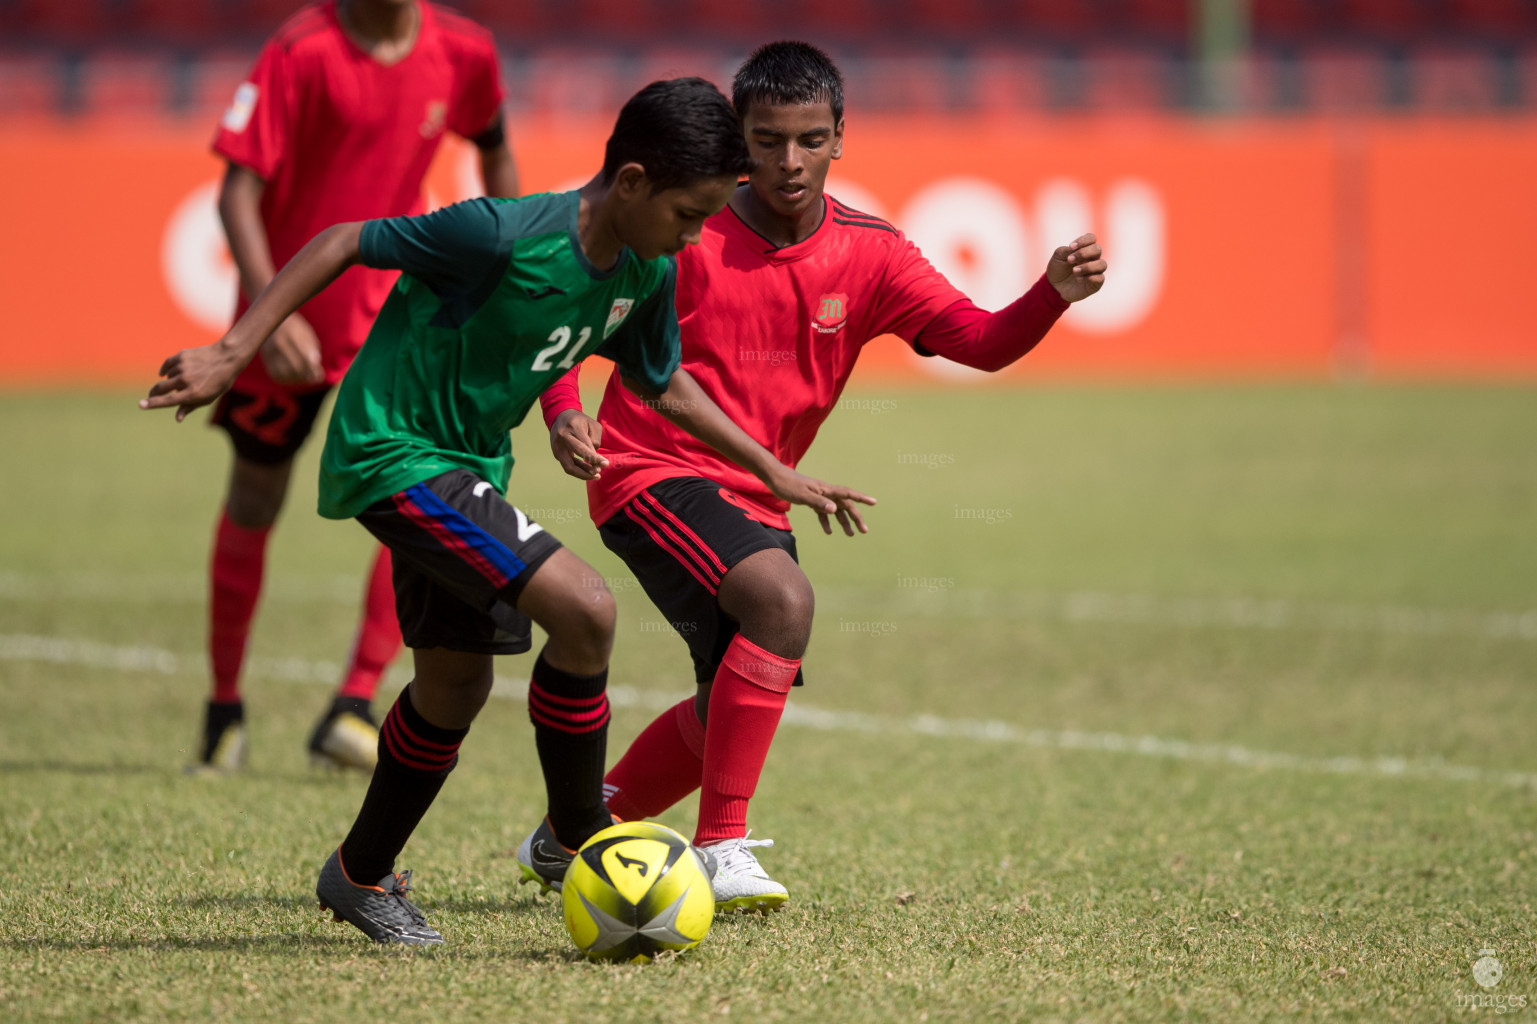 Majeedhiyya School vs Muhyidhin School in Mamen Inter-School Football Tournament 2019 (U15) on 27th February 2019, Monday in Male' Maldives (Images.mv Photo: Suadh Abdul Sattar)